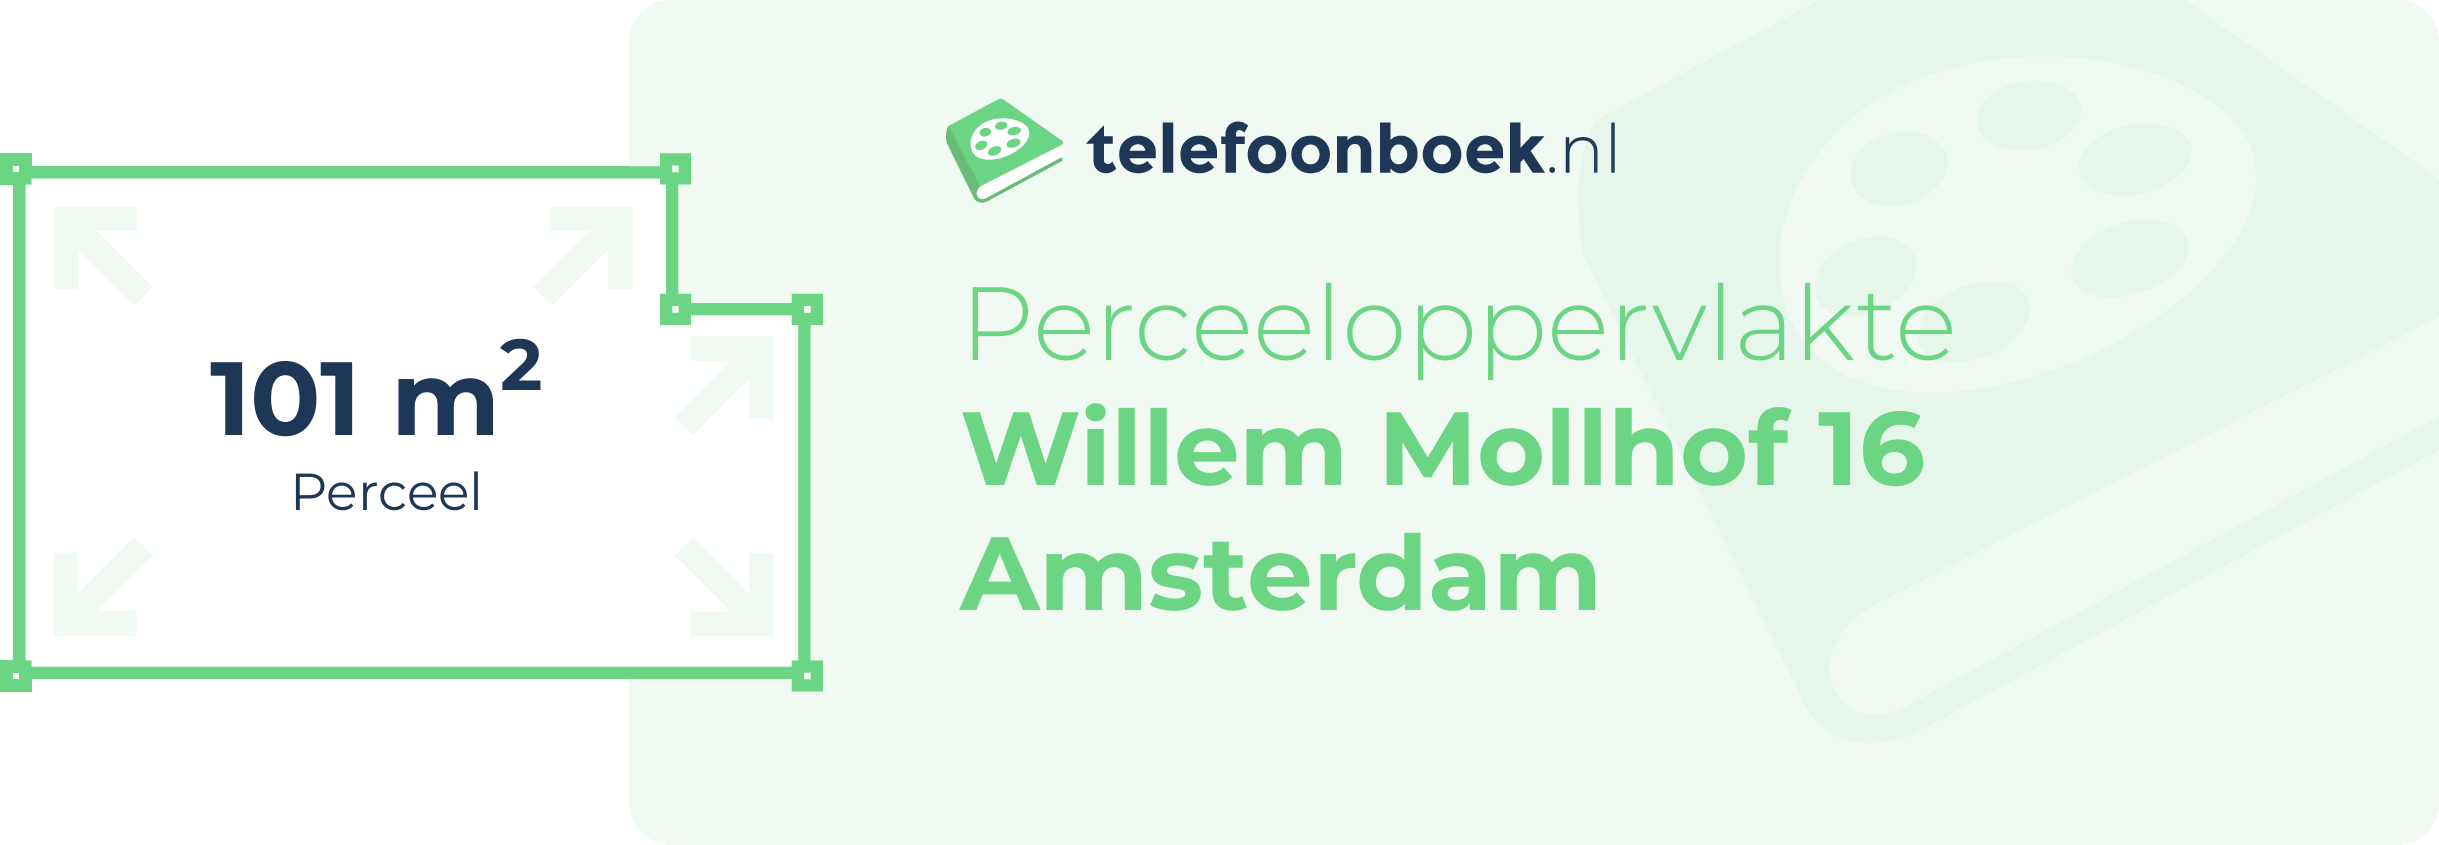 Perceeloppervlakte Willem Mollhof 16 Amsterdam